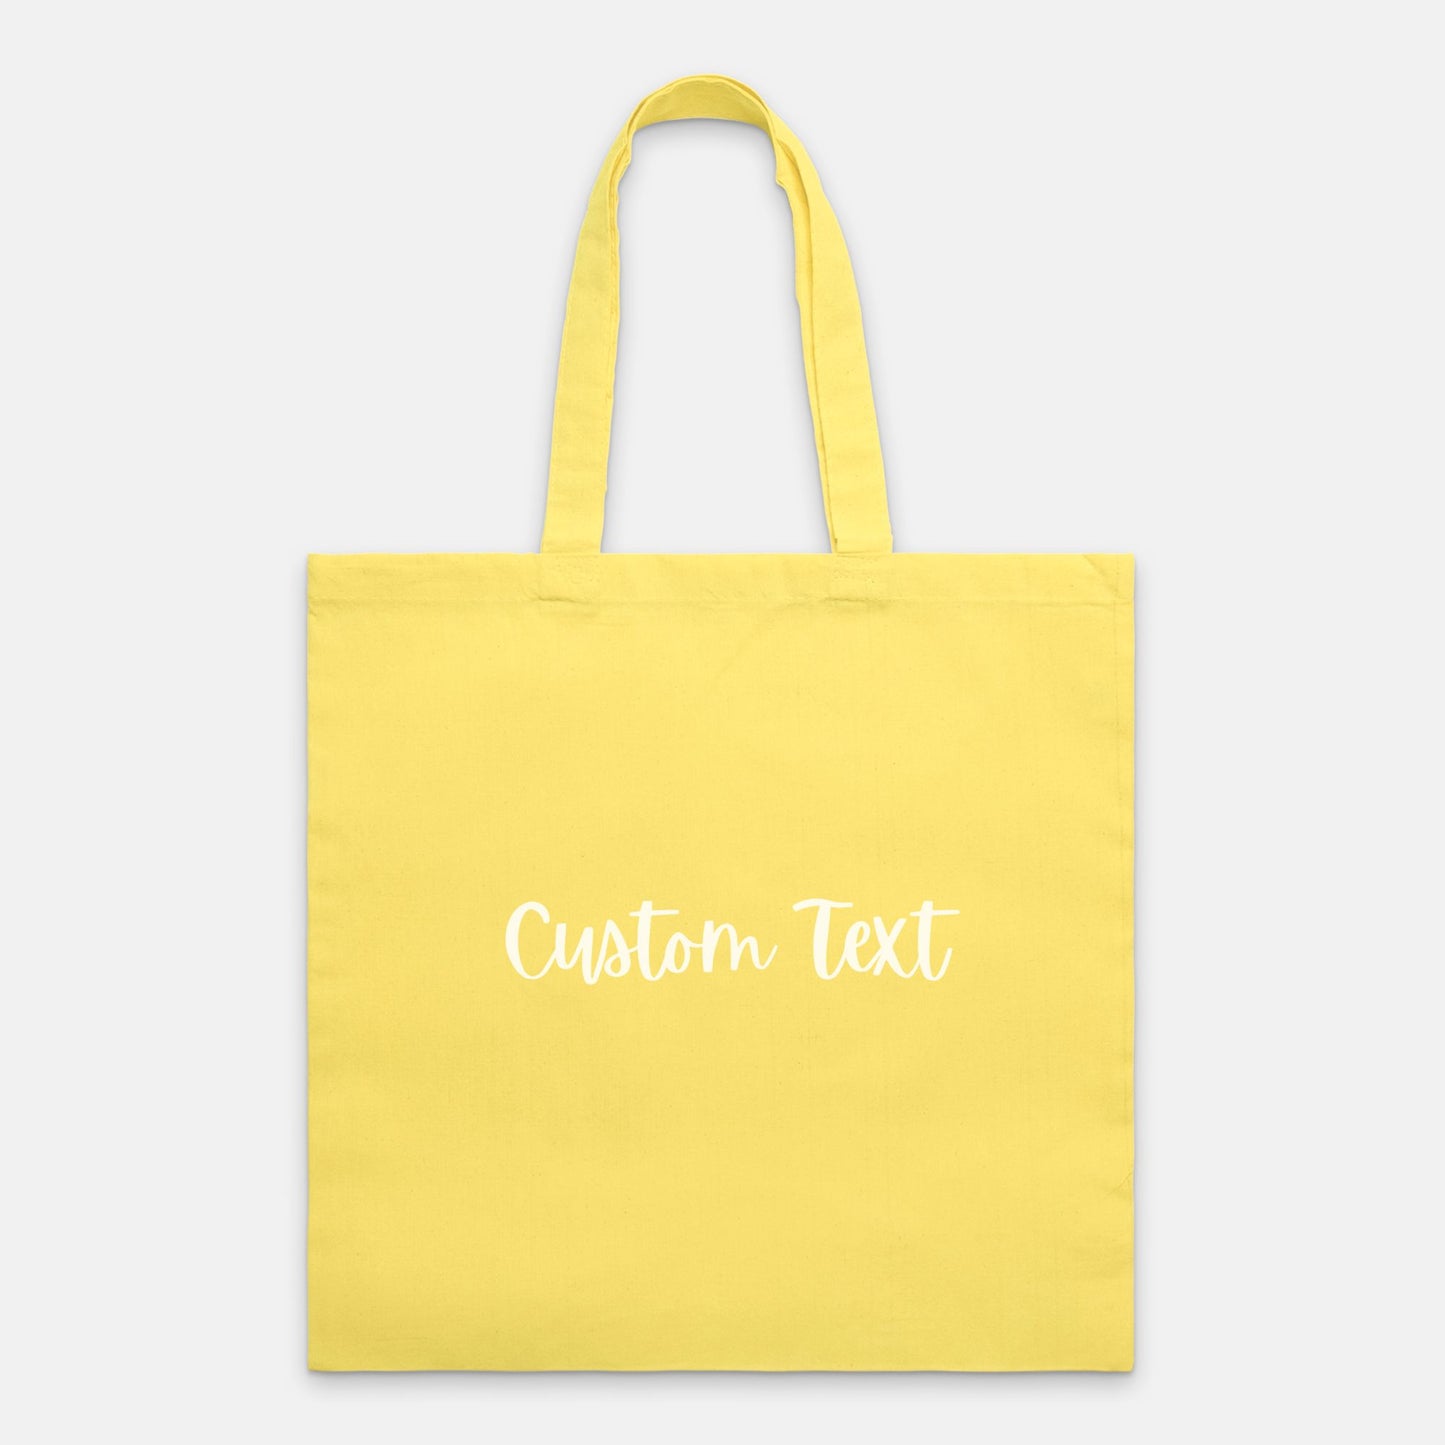 Custom Text - Tote Bag Lightweight